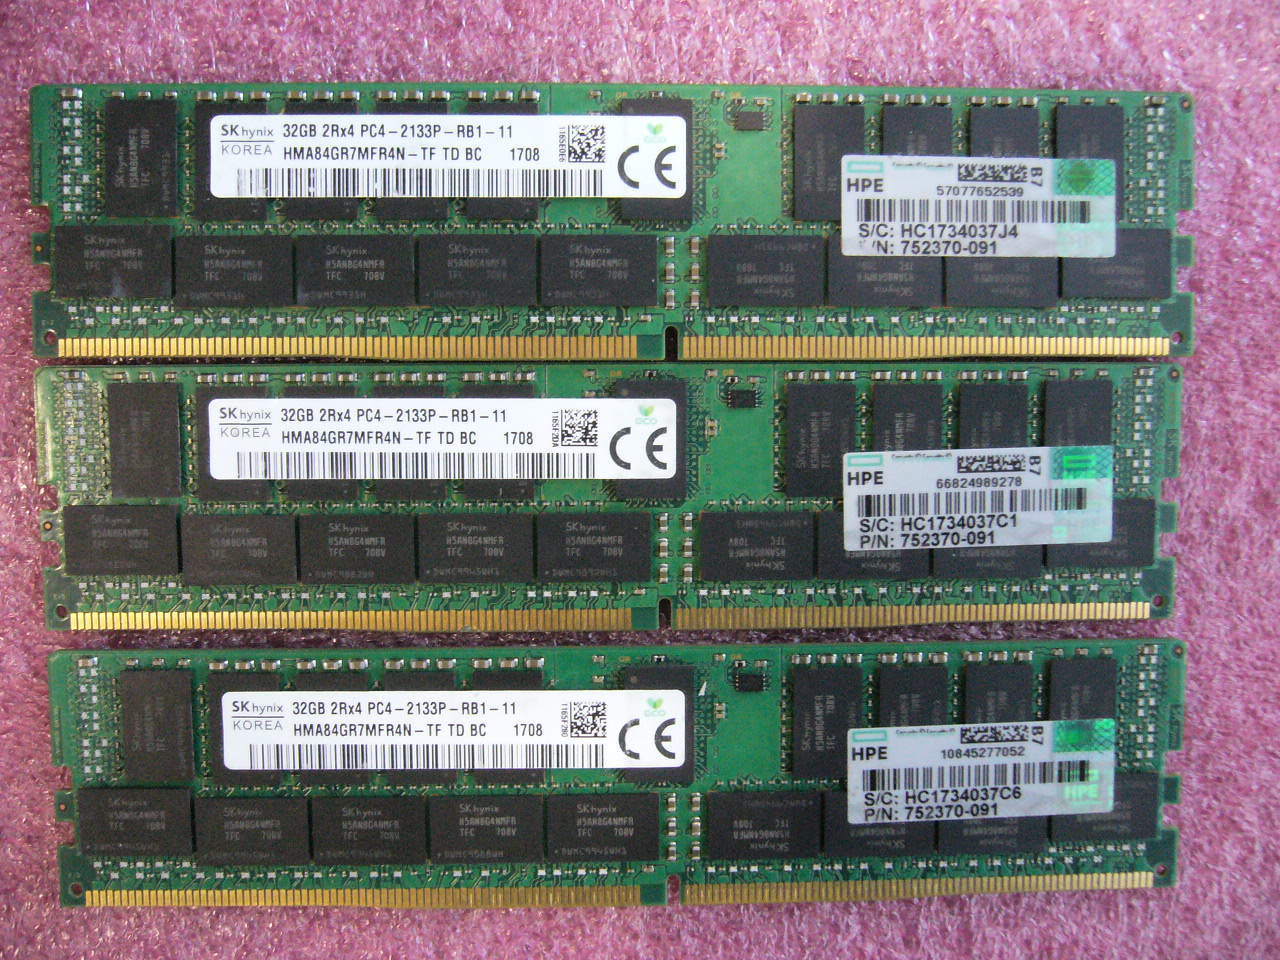 QTY 1x 32GB DDR4 2Rx4 PC4-2133P-RB1 ECC Registered memory SK Hynix HP 752370-091